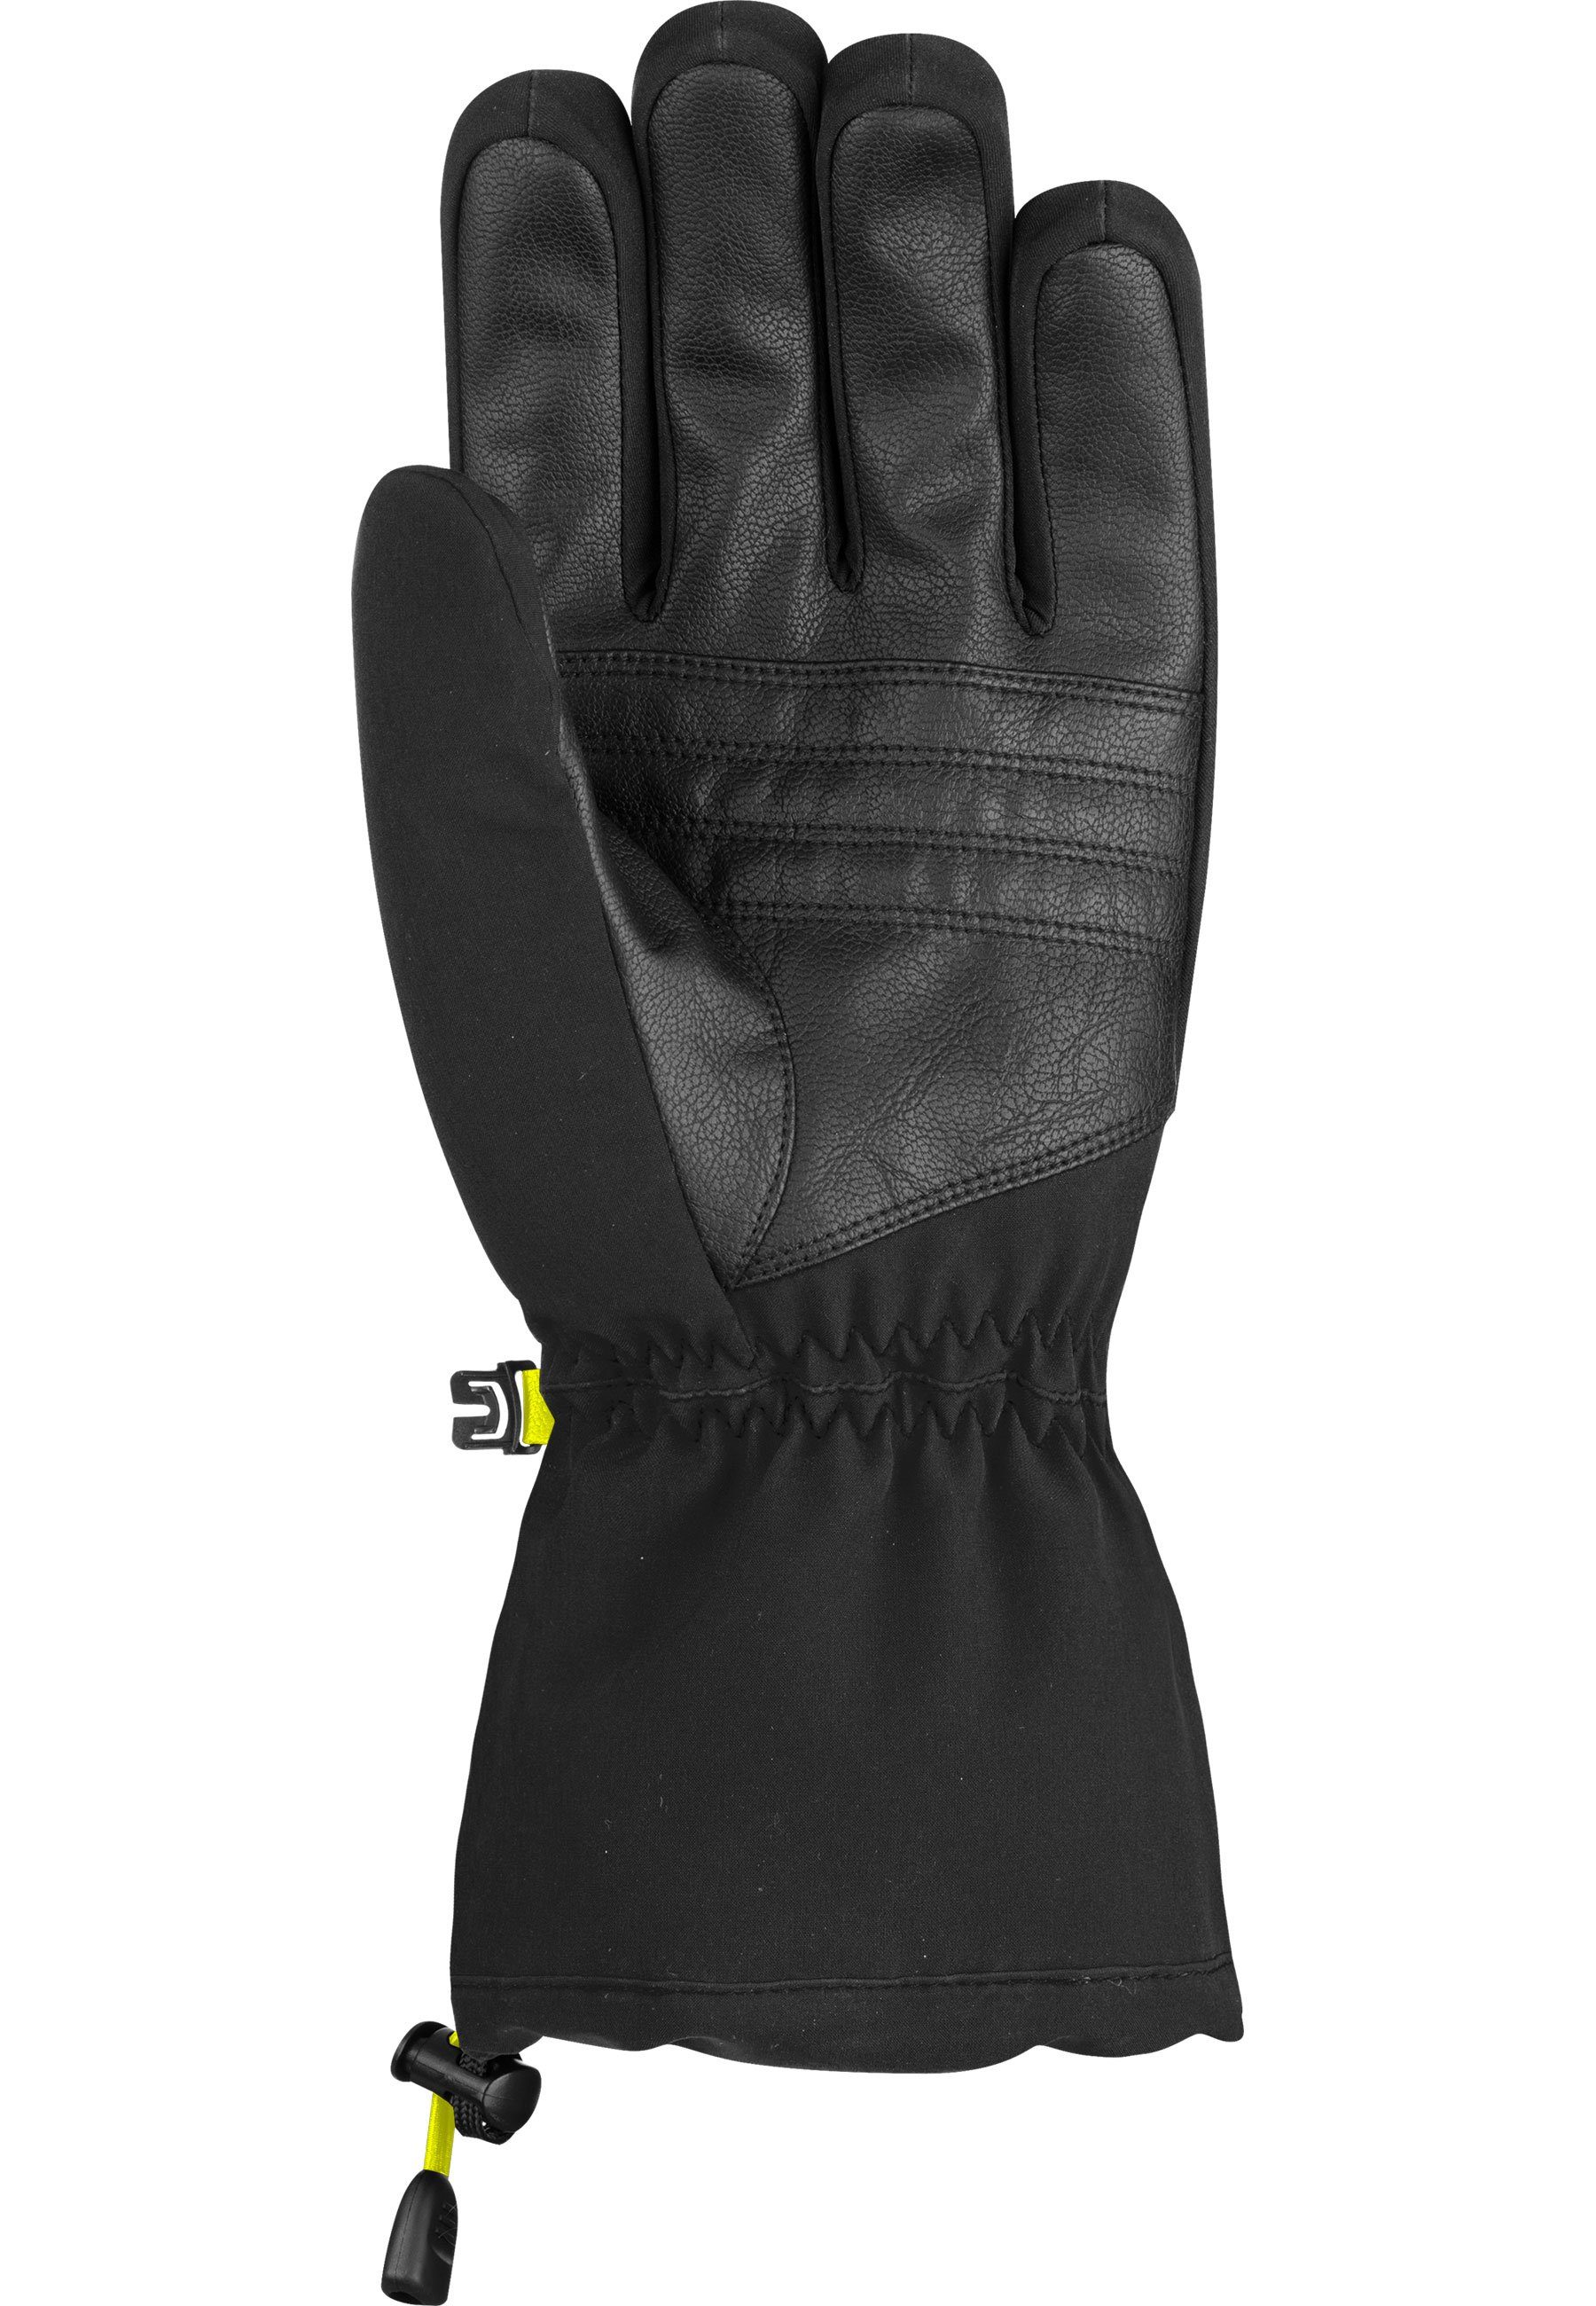 Design atmungsaktivem XT Skihandschuhe gelb-schwarz Reusch Kondor und R-TEX® wasserdichtem in